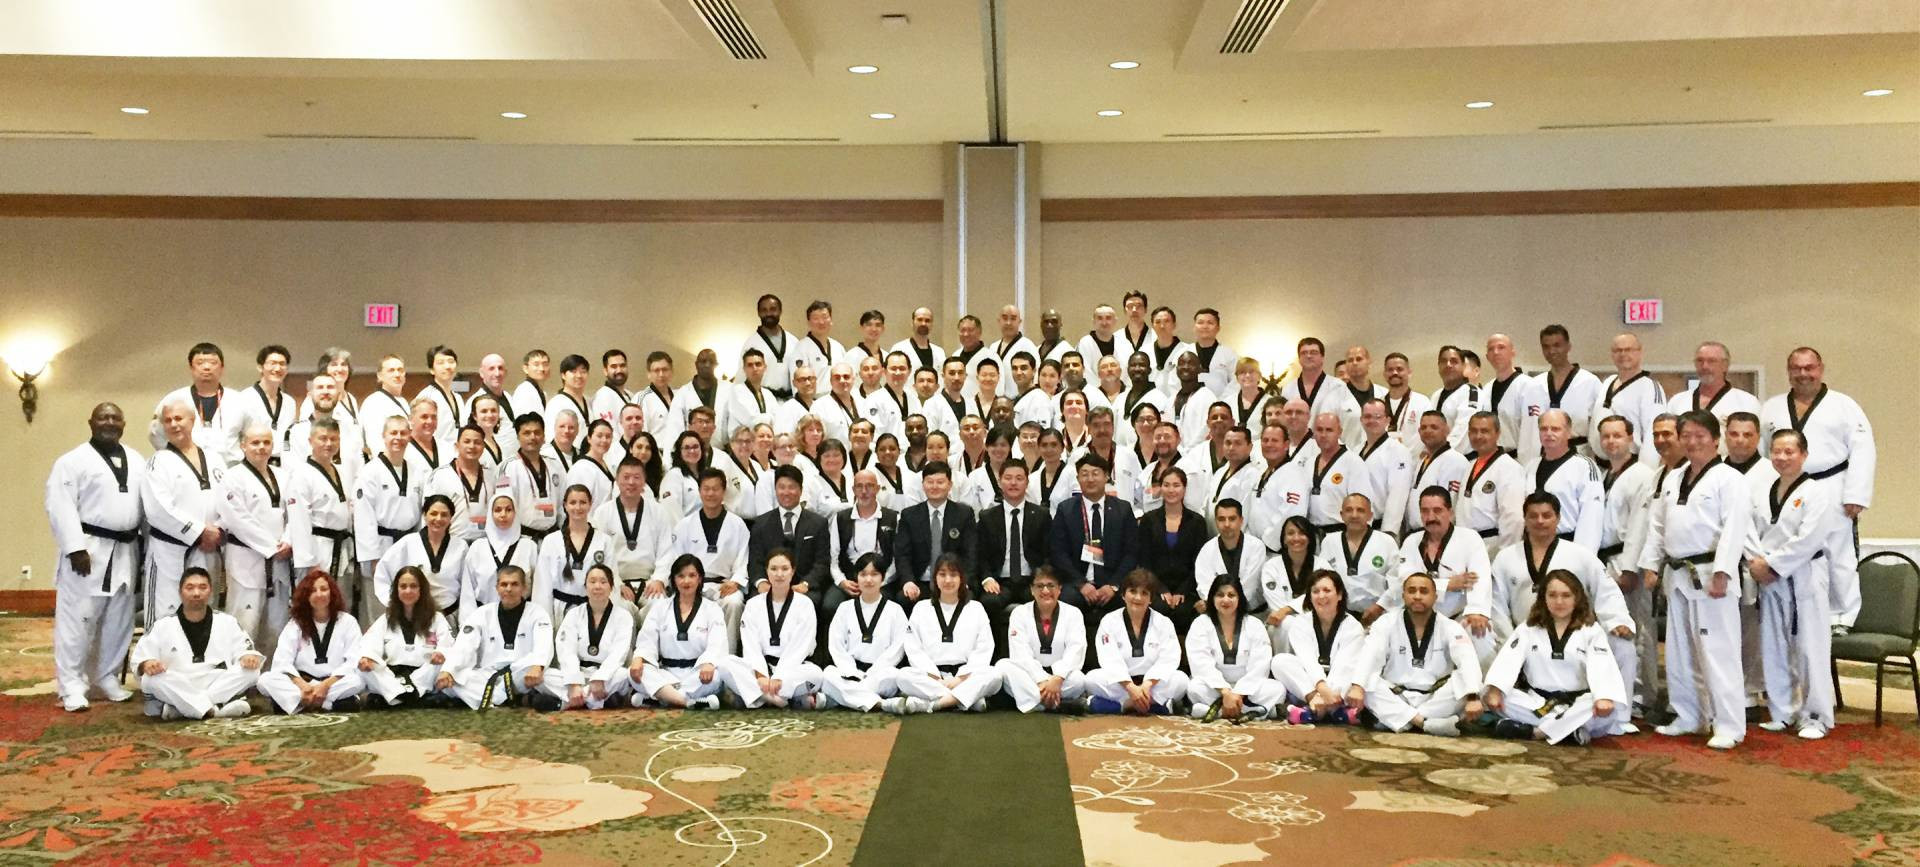 Taekwondo Canada hosts referee seminar in Burnaby